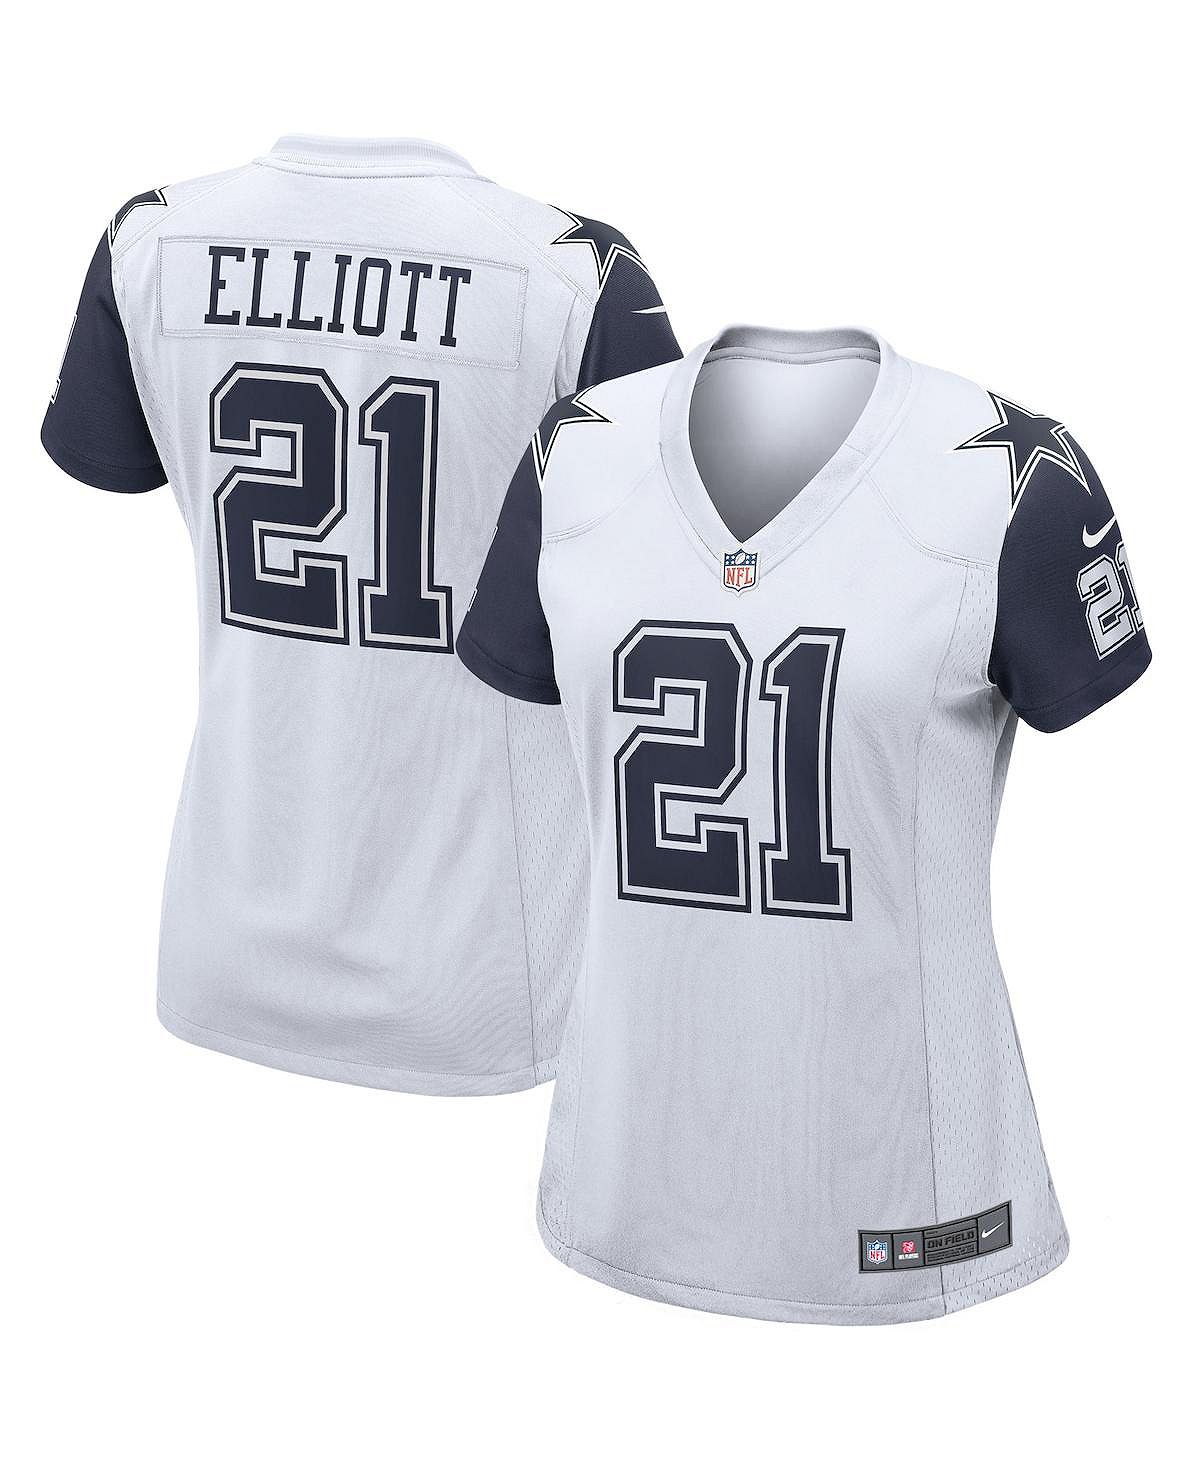 Женская футболка Ezekiel Elliott White Dallas Cowboys Alternate Game Nike, белый мужская футболка ezekiel elliott dallas cowboys game team nike синий